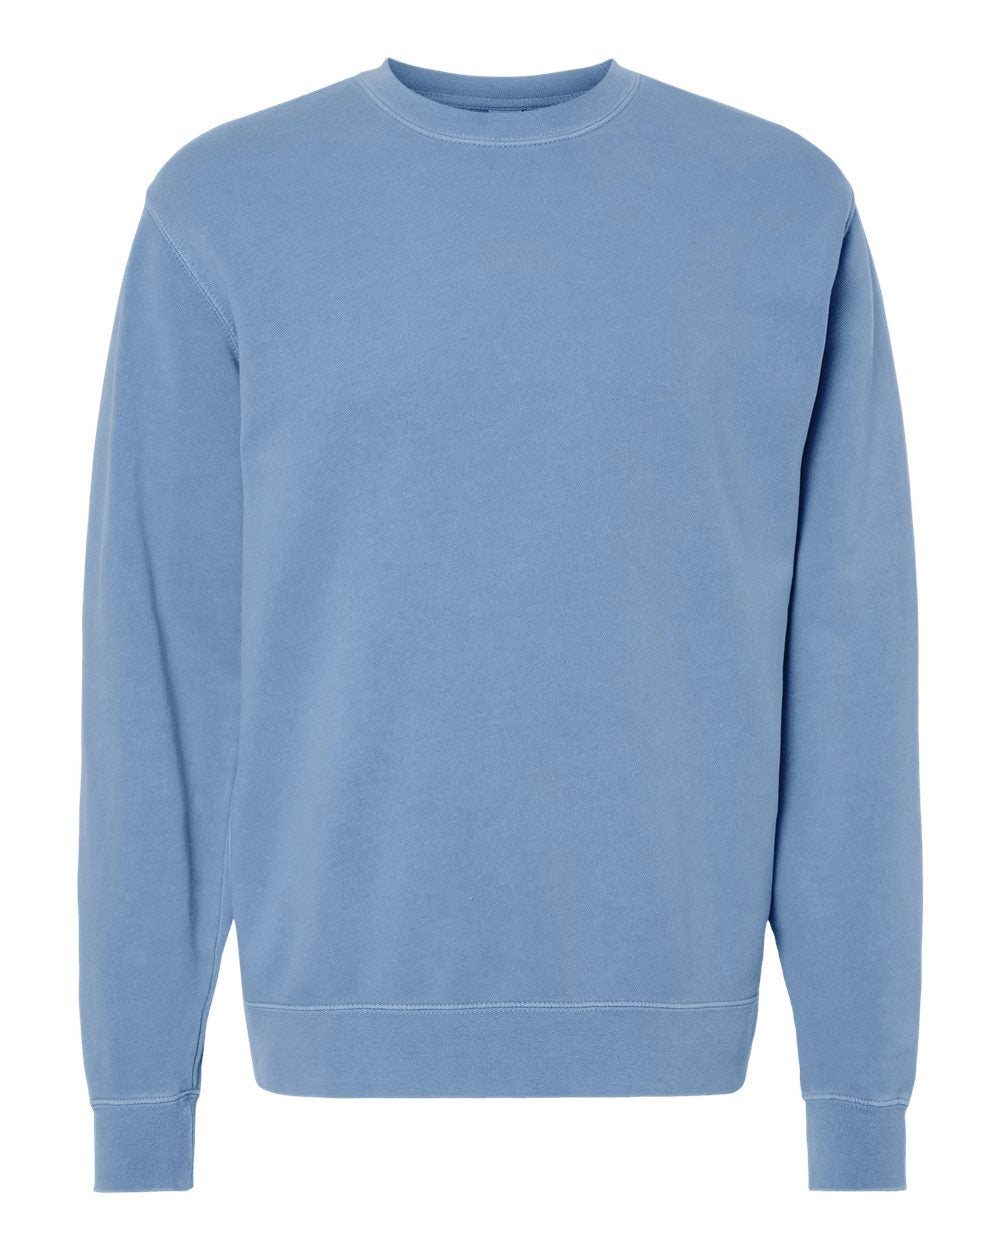 Pigment-Dyed Light Blue Crewneck Sweatshirt (Adult)